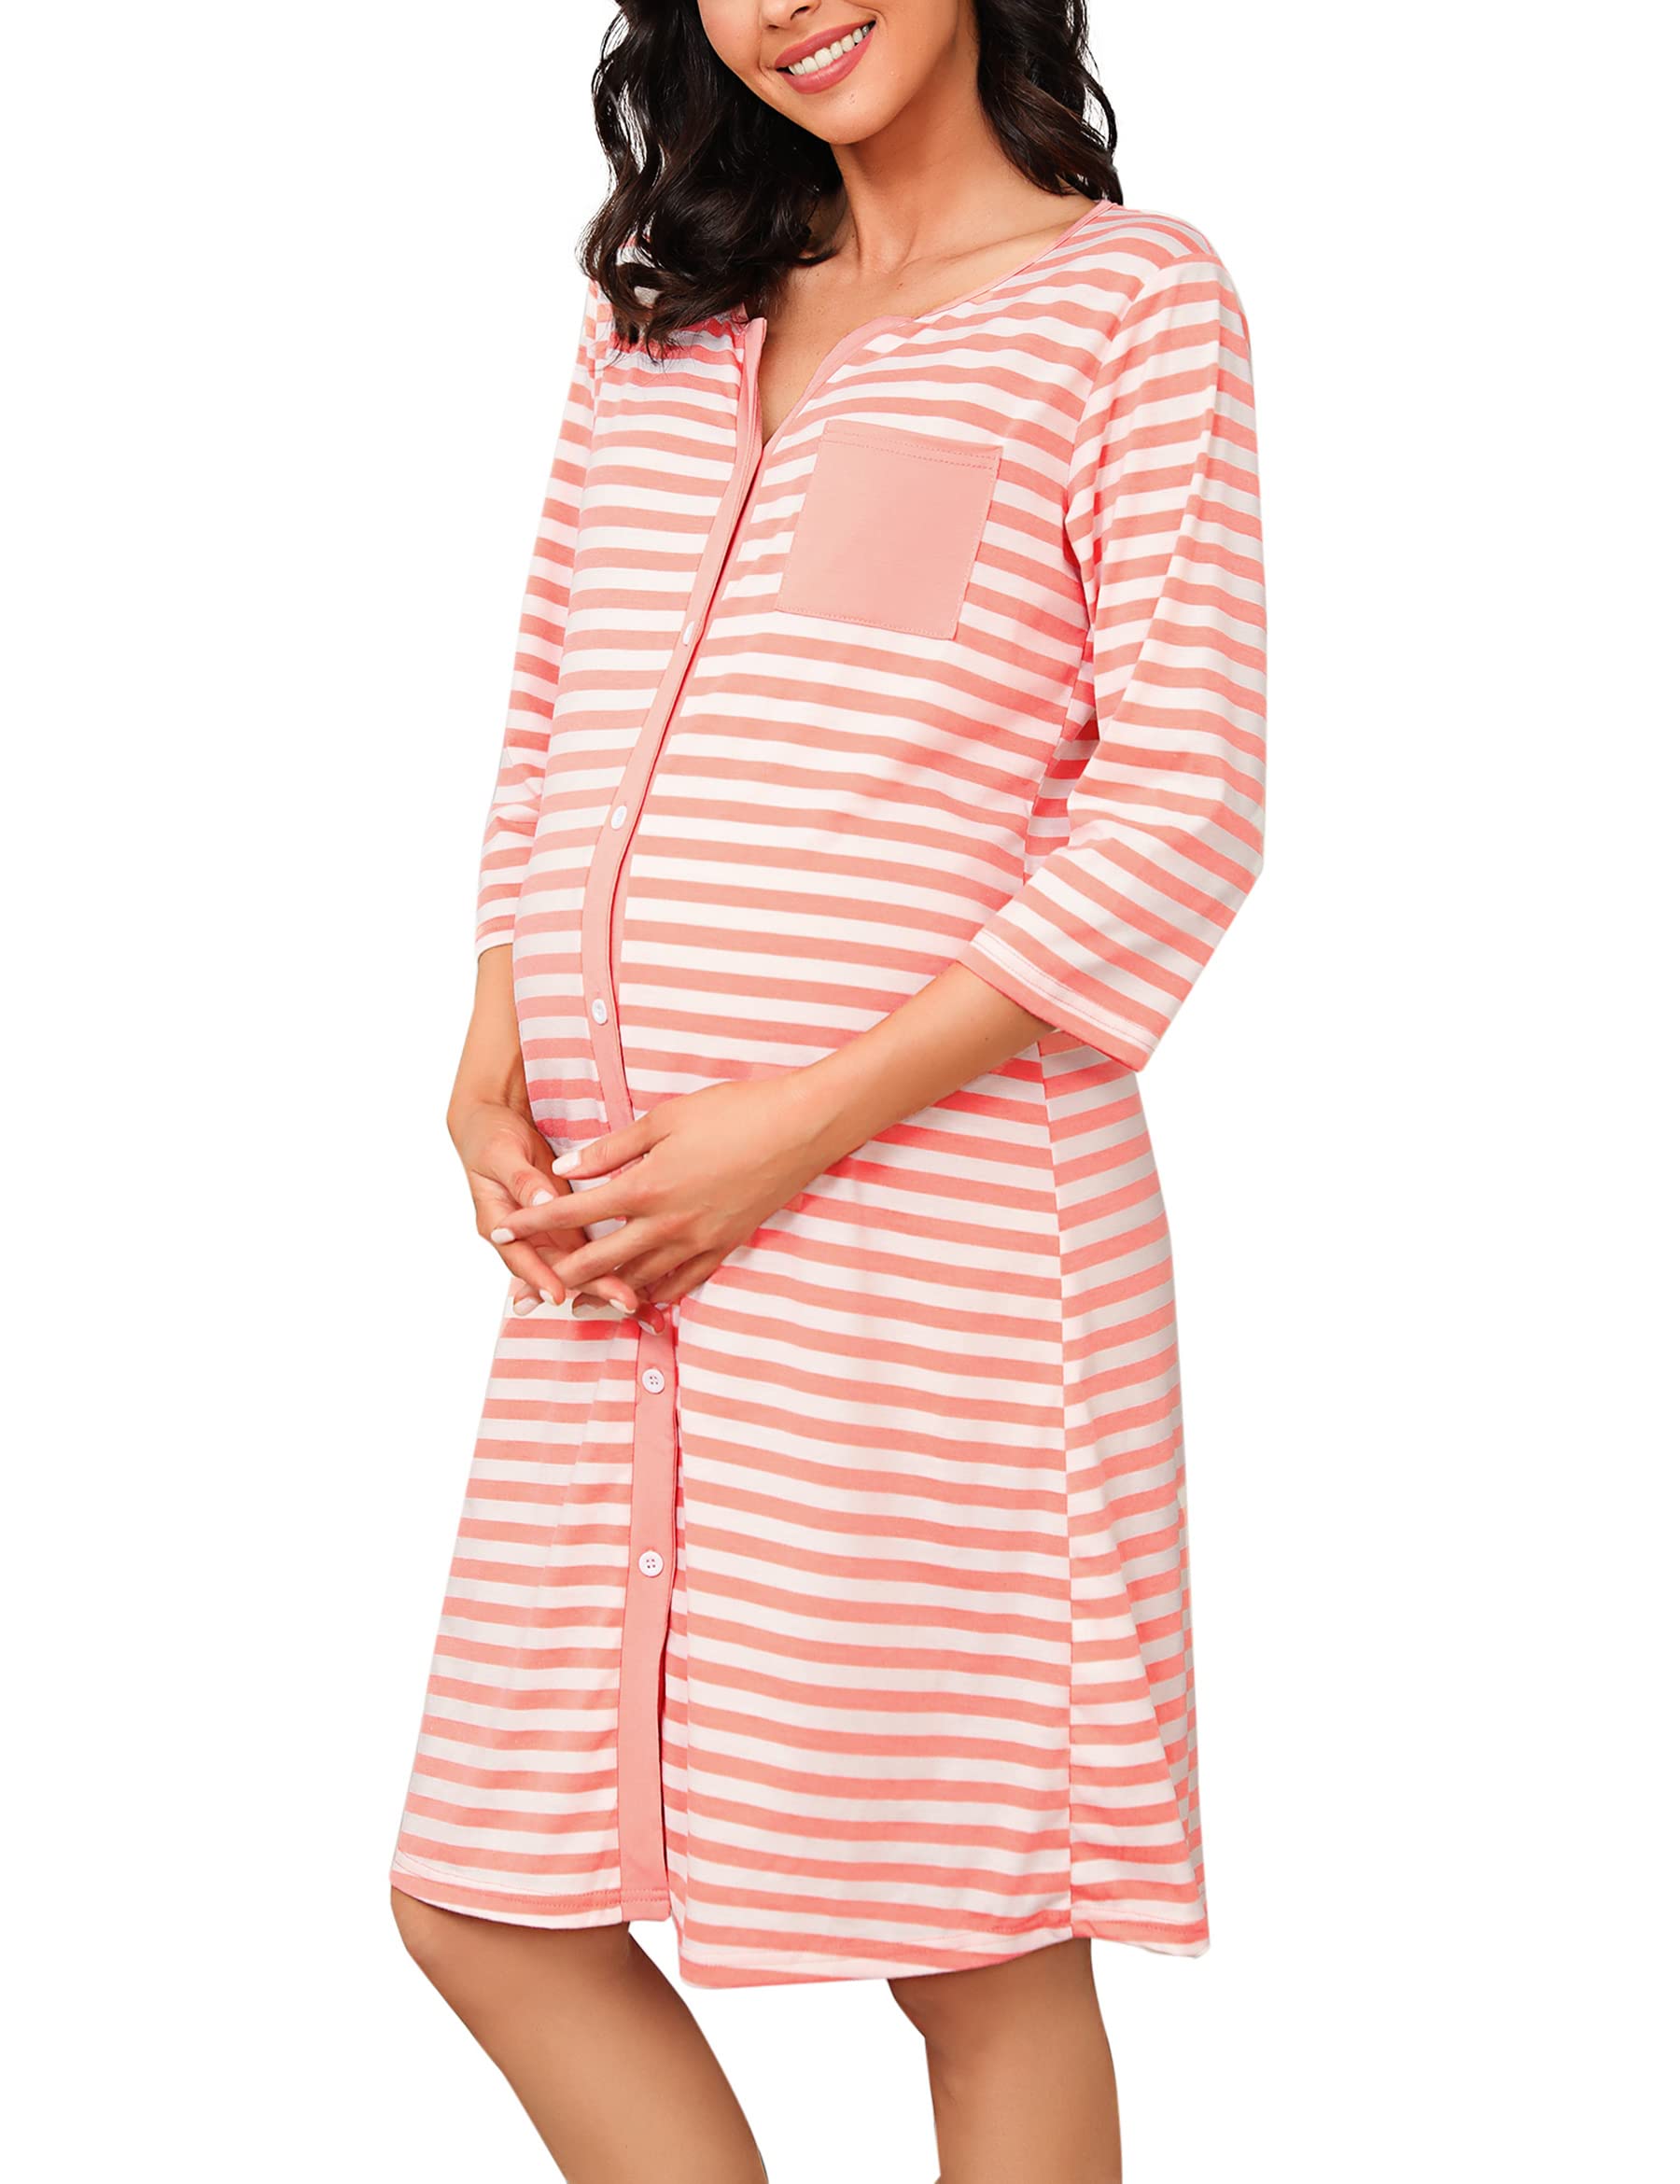 Marvmys Maternity Nightdress For Hospital Breastfeeding Nightwear